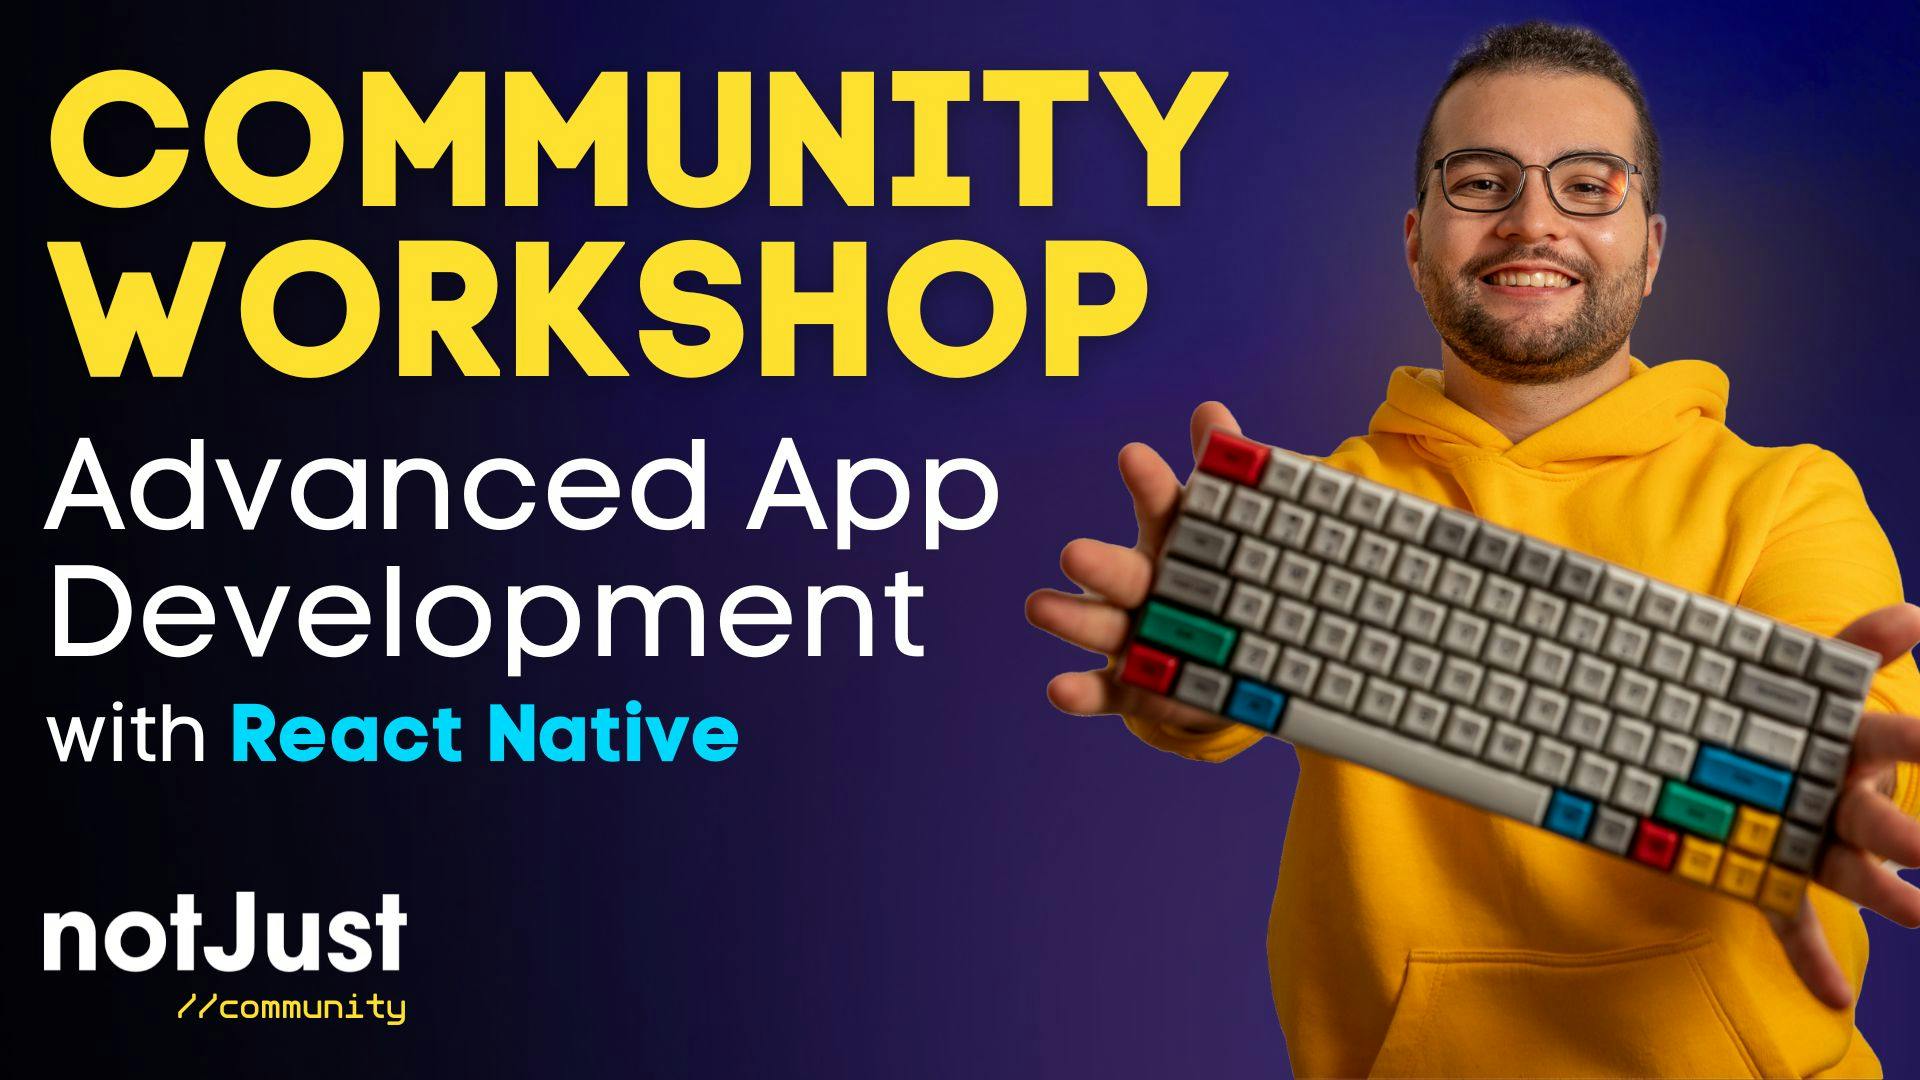 Community Workshop - Advanced App Development with React Native